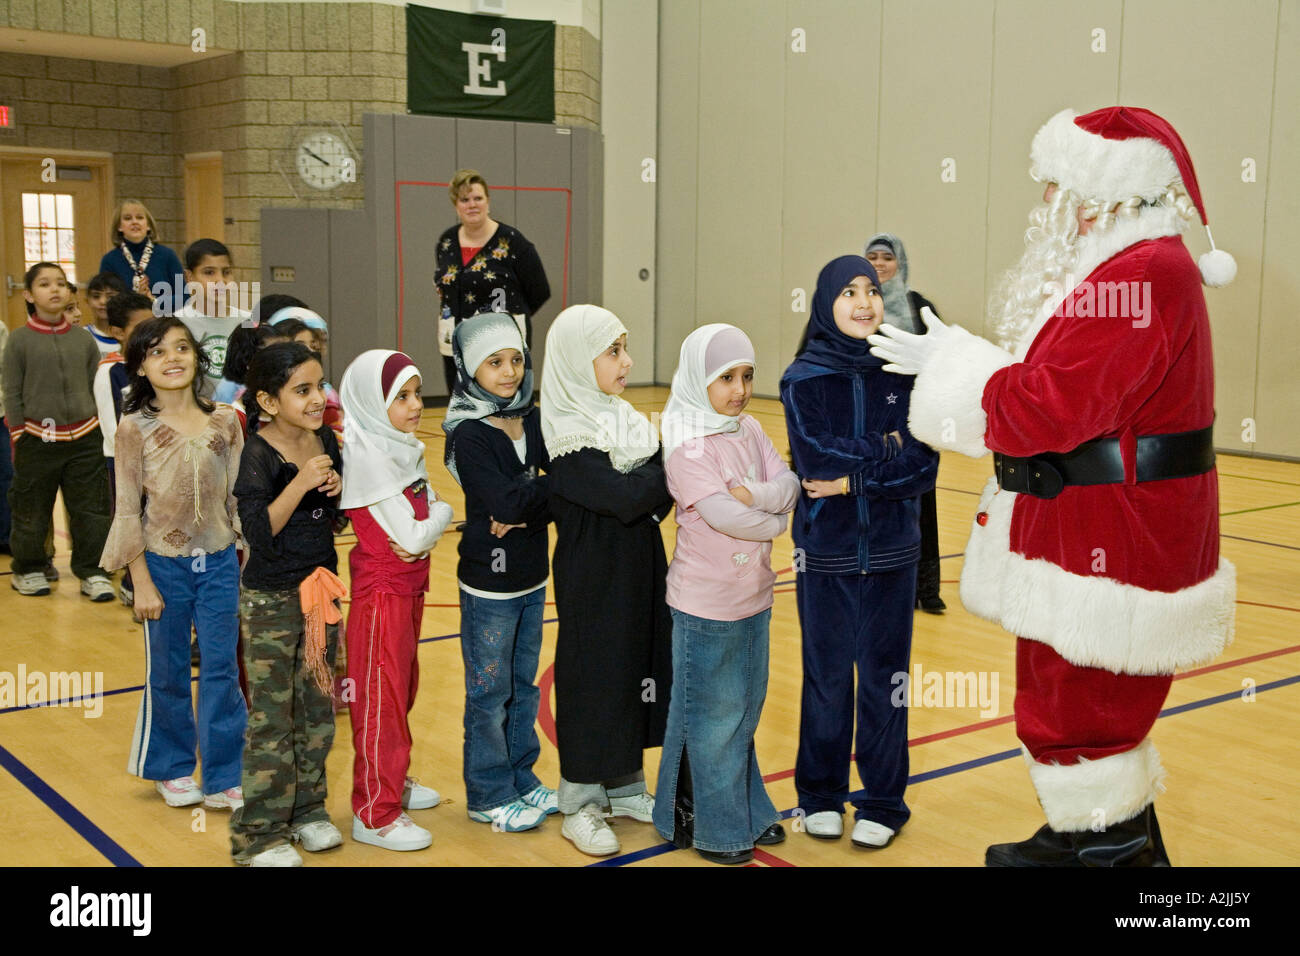 santa-visits-muslim-immigrant-children-A2JJ5Y.jpg